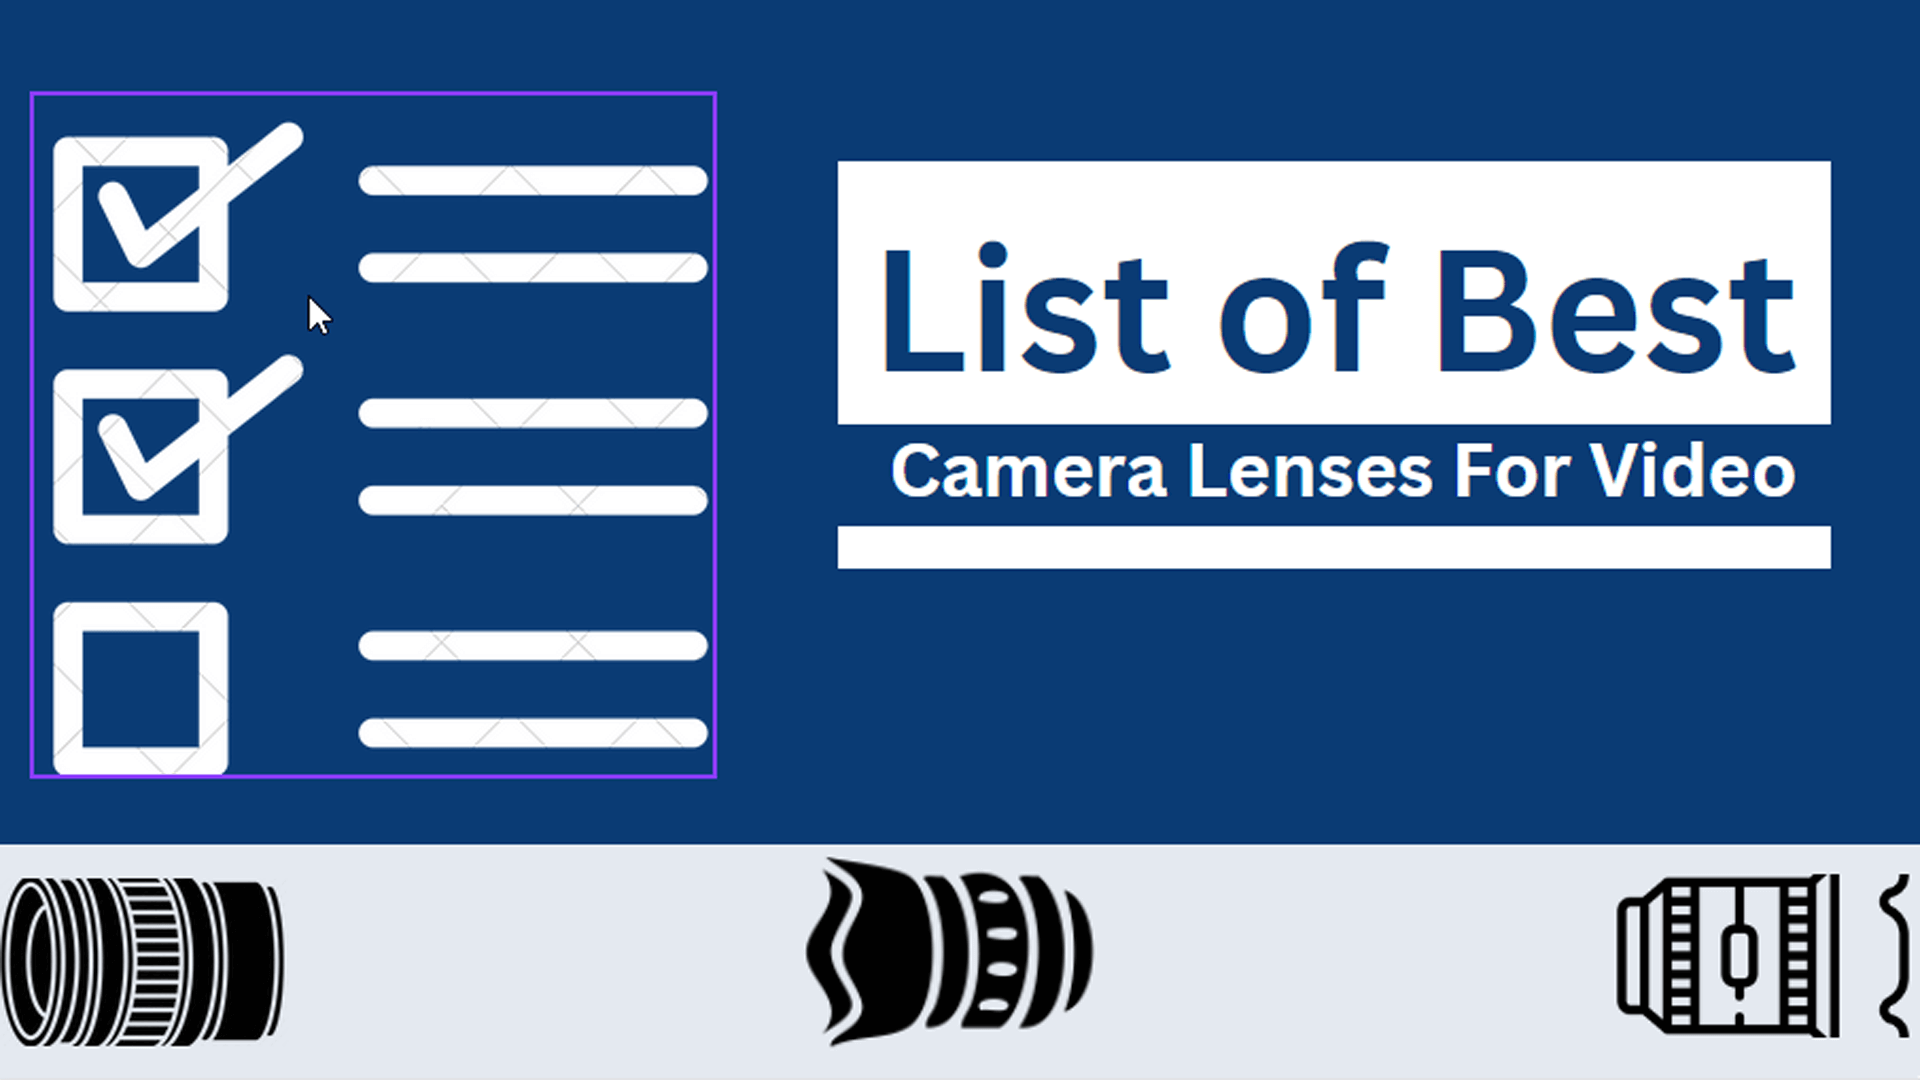 List of camera lenses for video vinepeaks.com